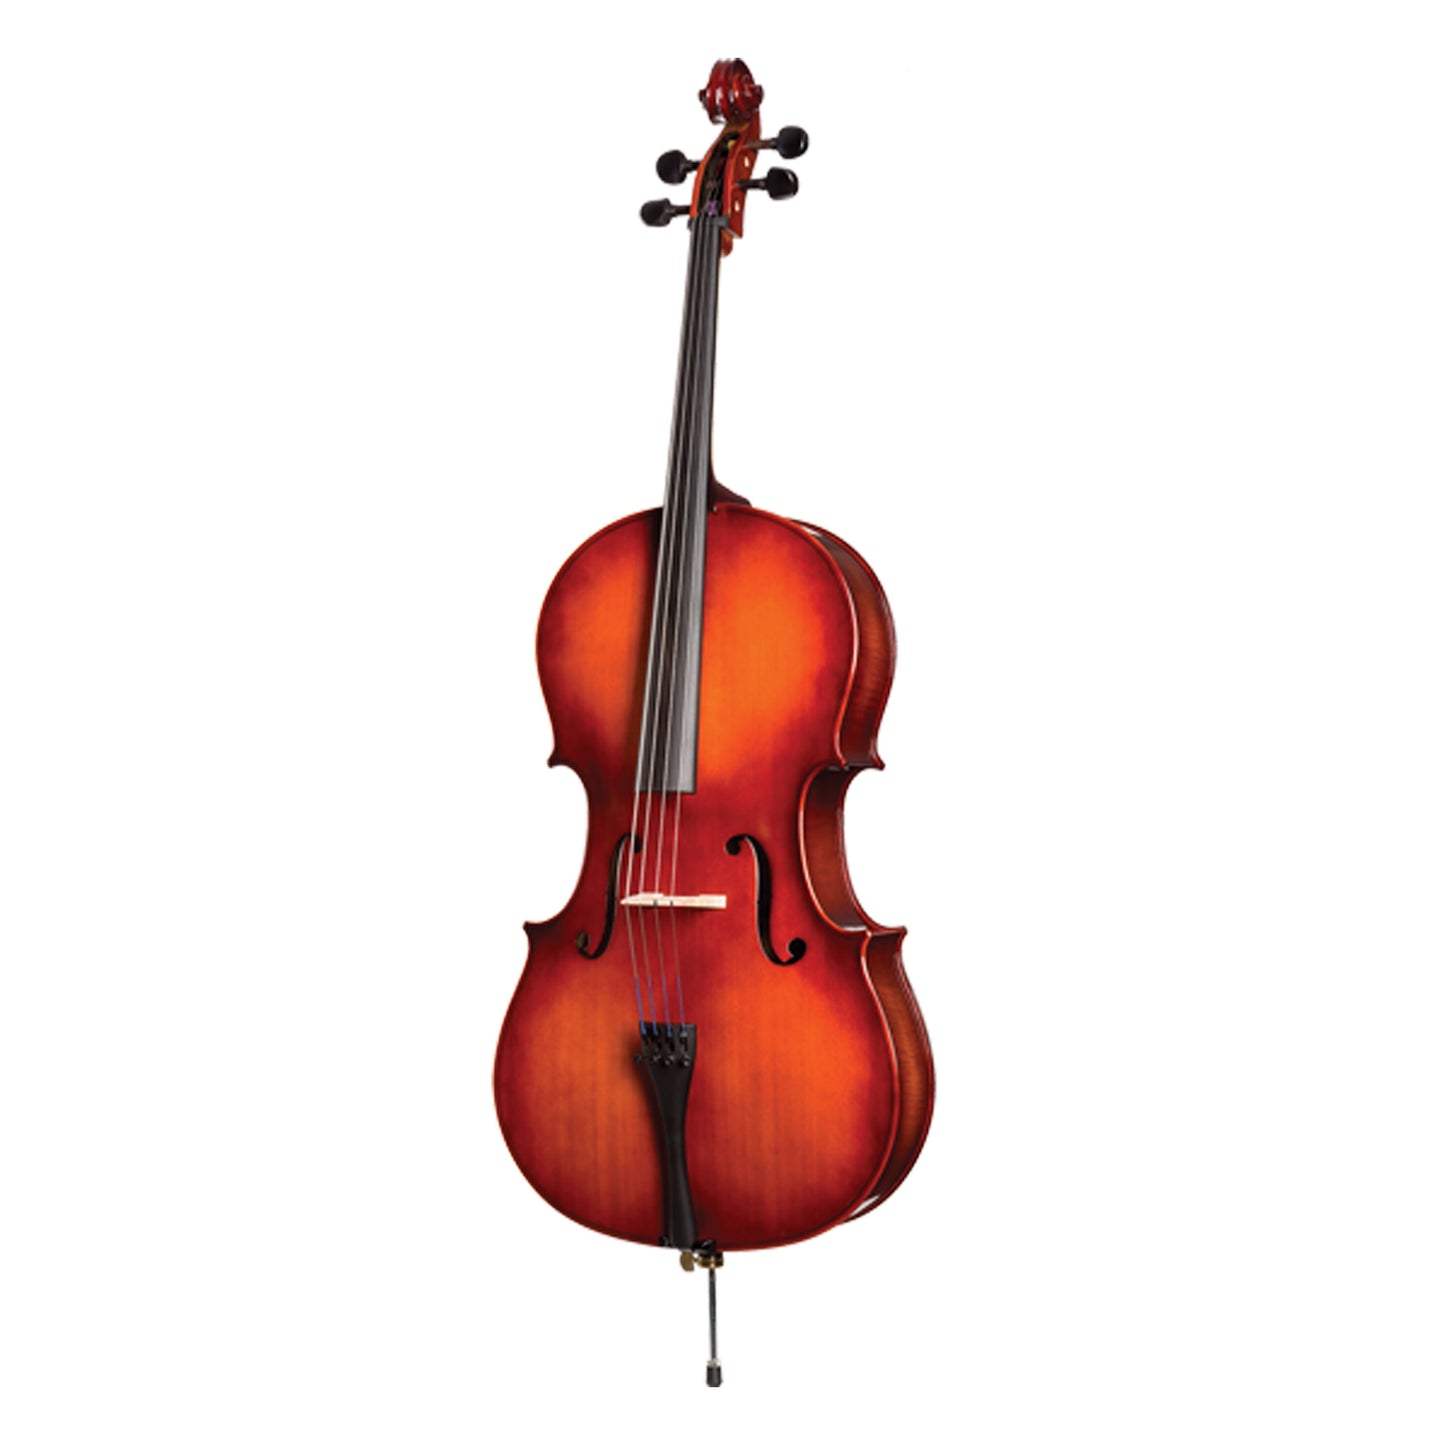 Howard Core Academy A30 1/4"" Cello Outfit